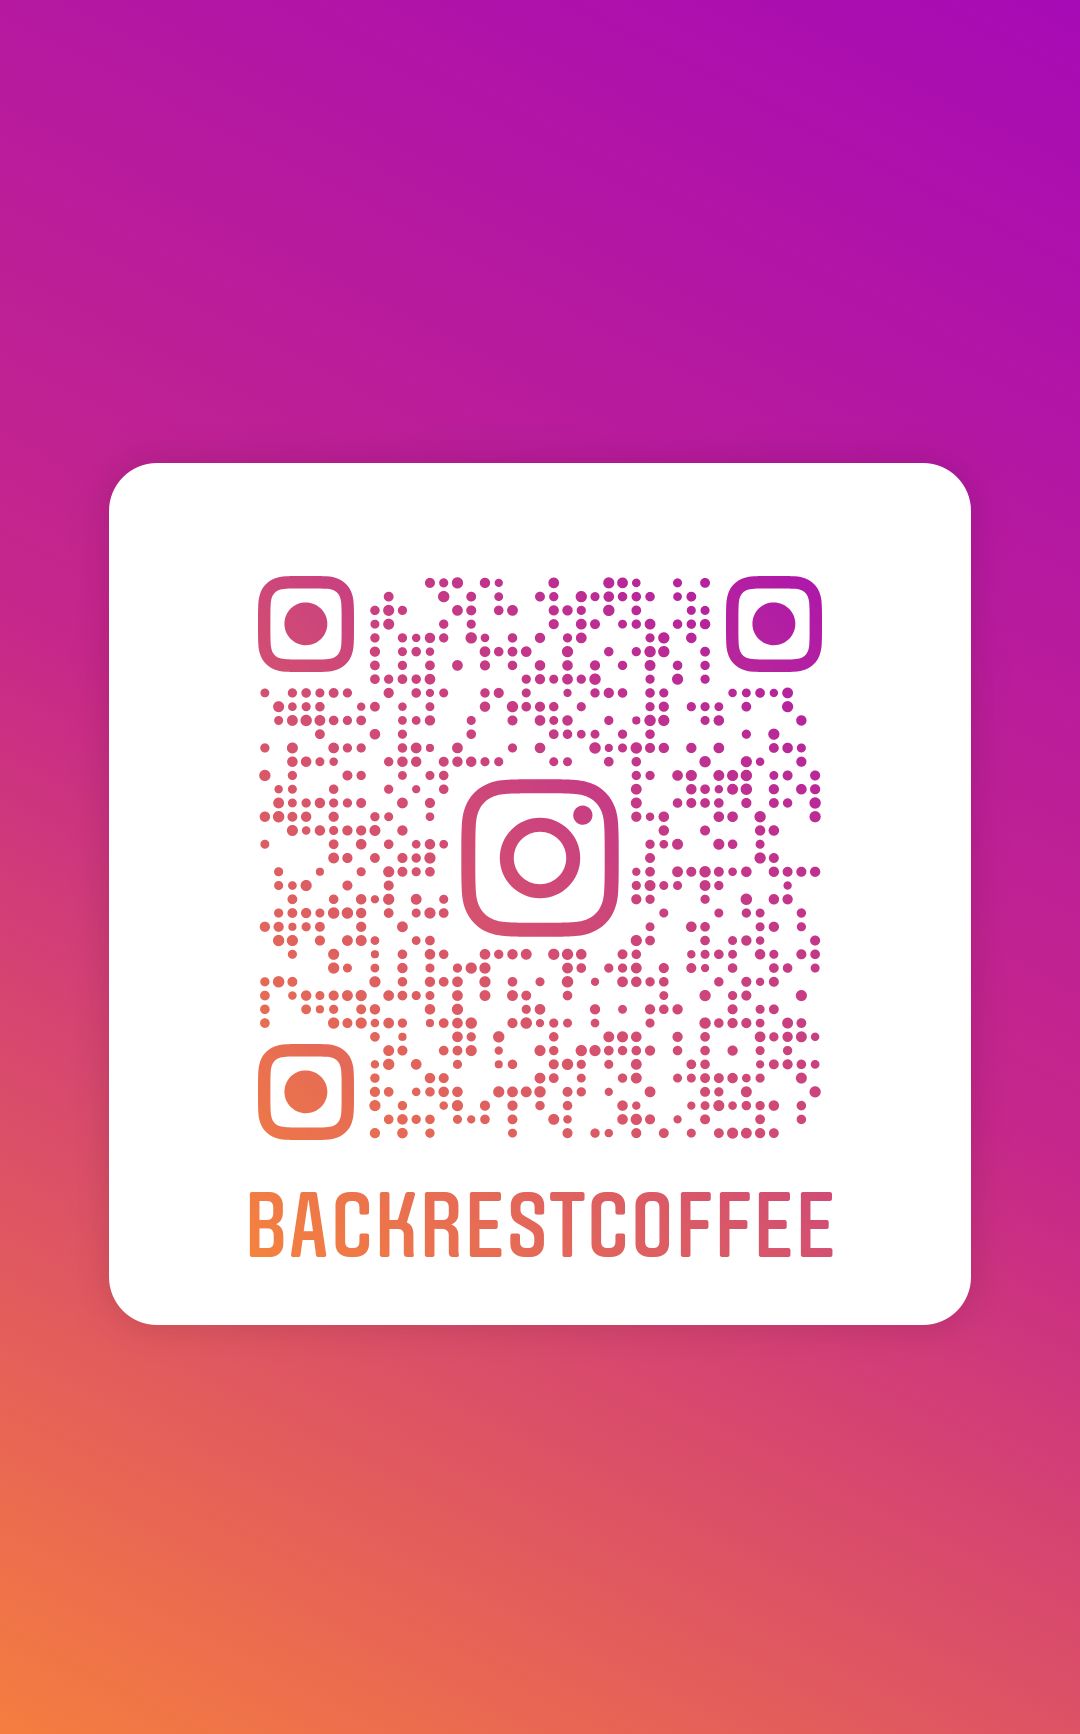 BackrestCoffee Instagram